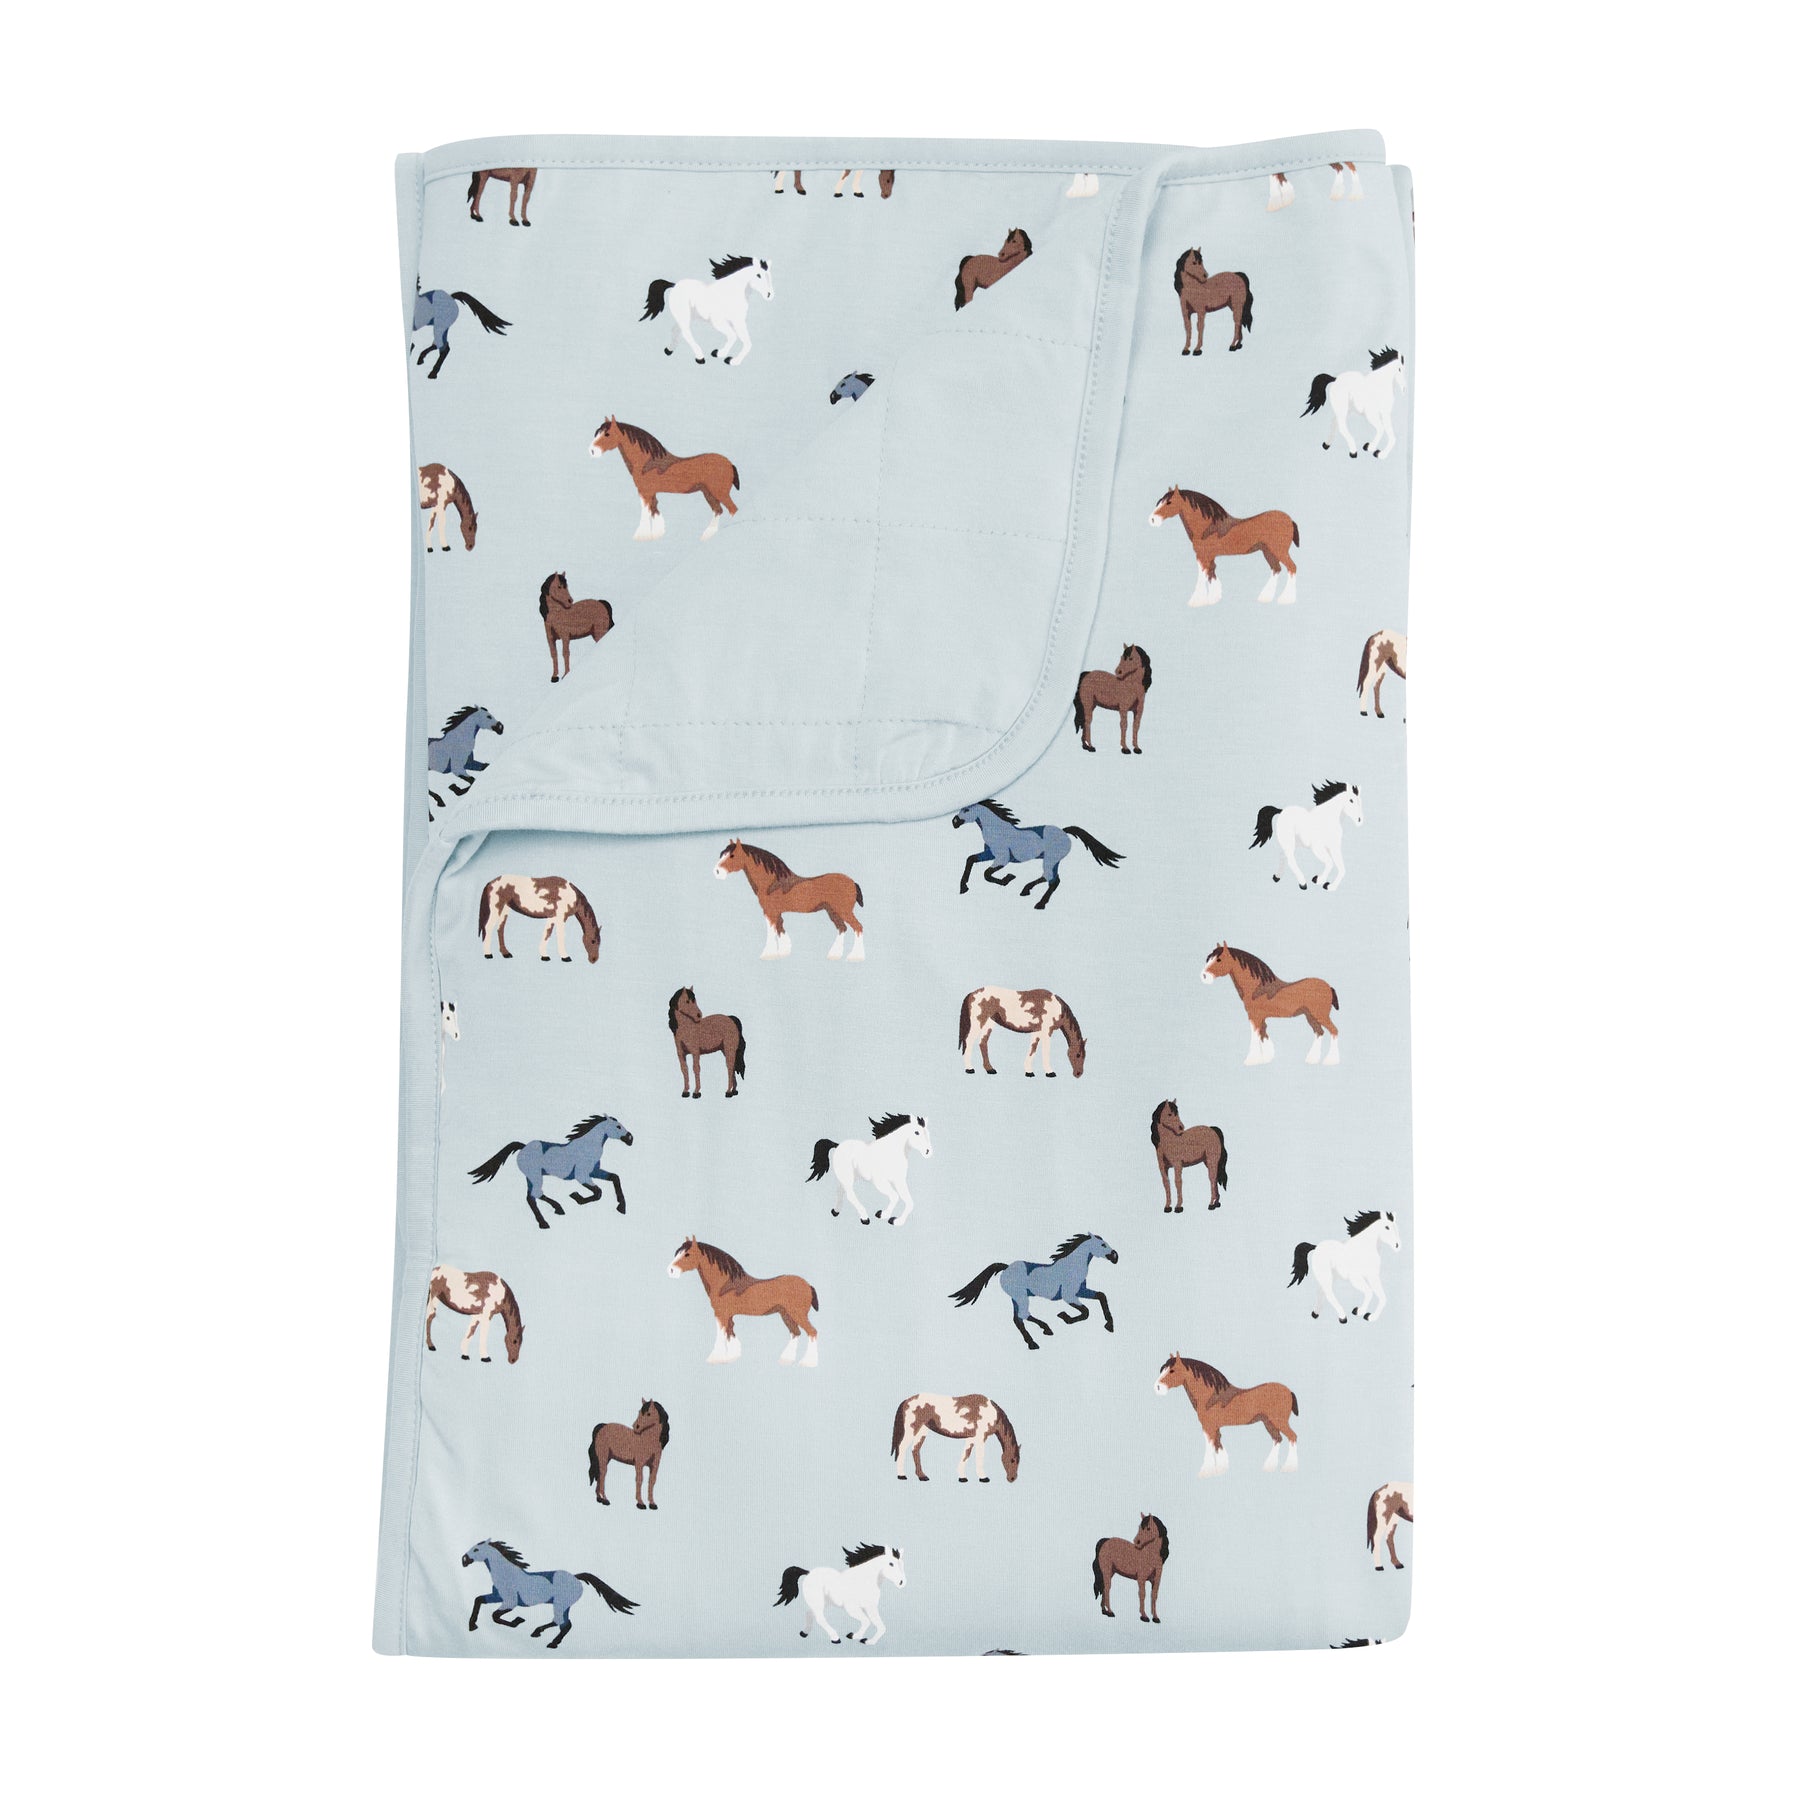 Toddler Blanket in Horse 1.0